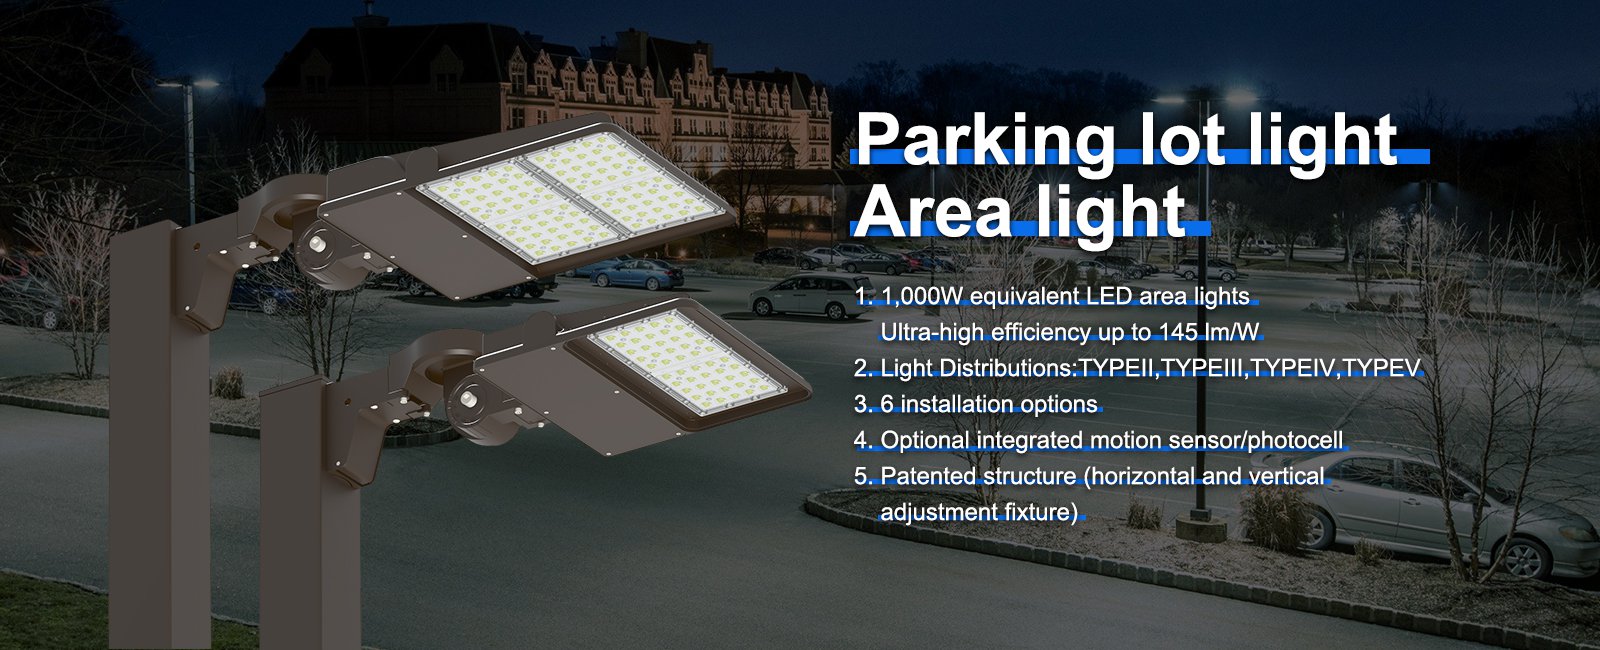 LED Parking lot light Area light